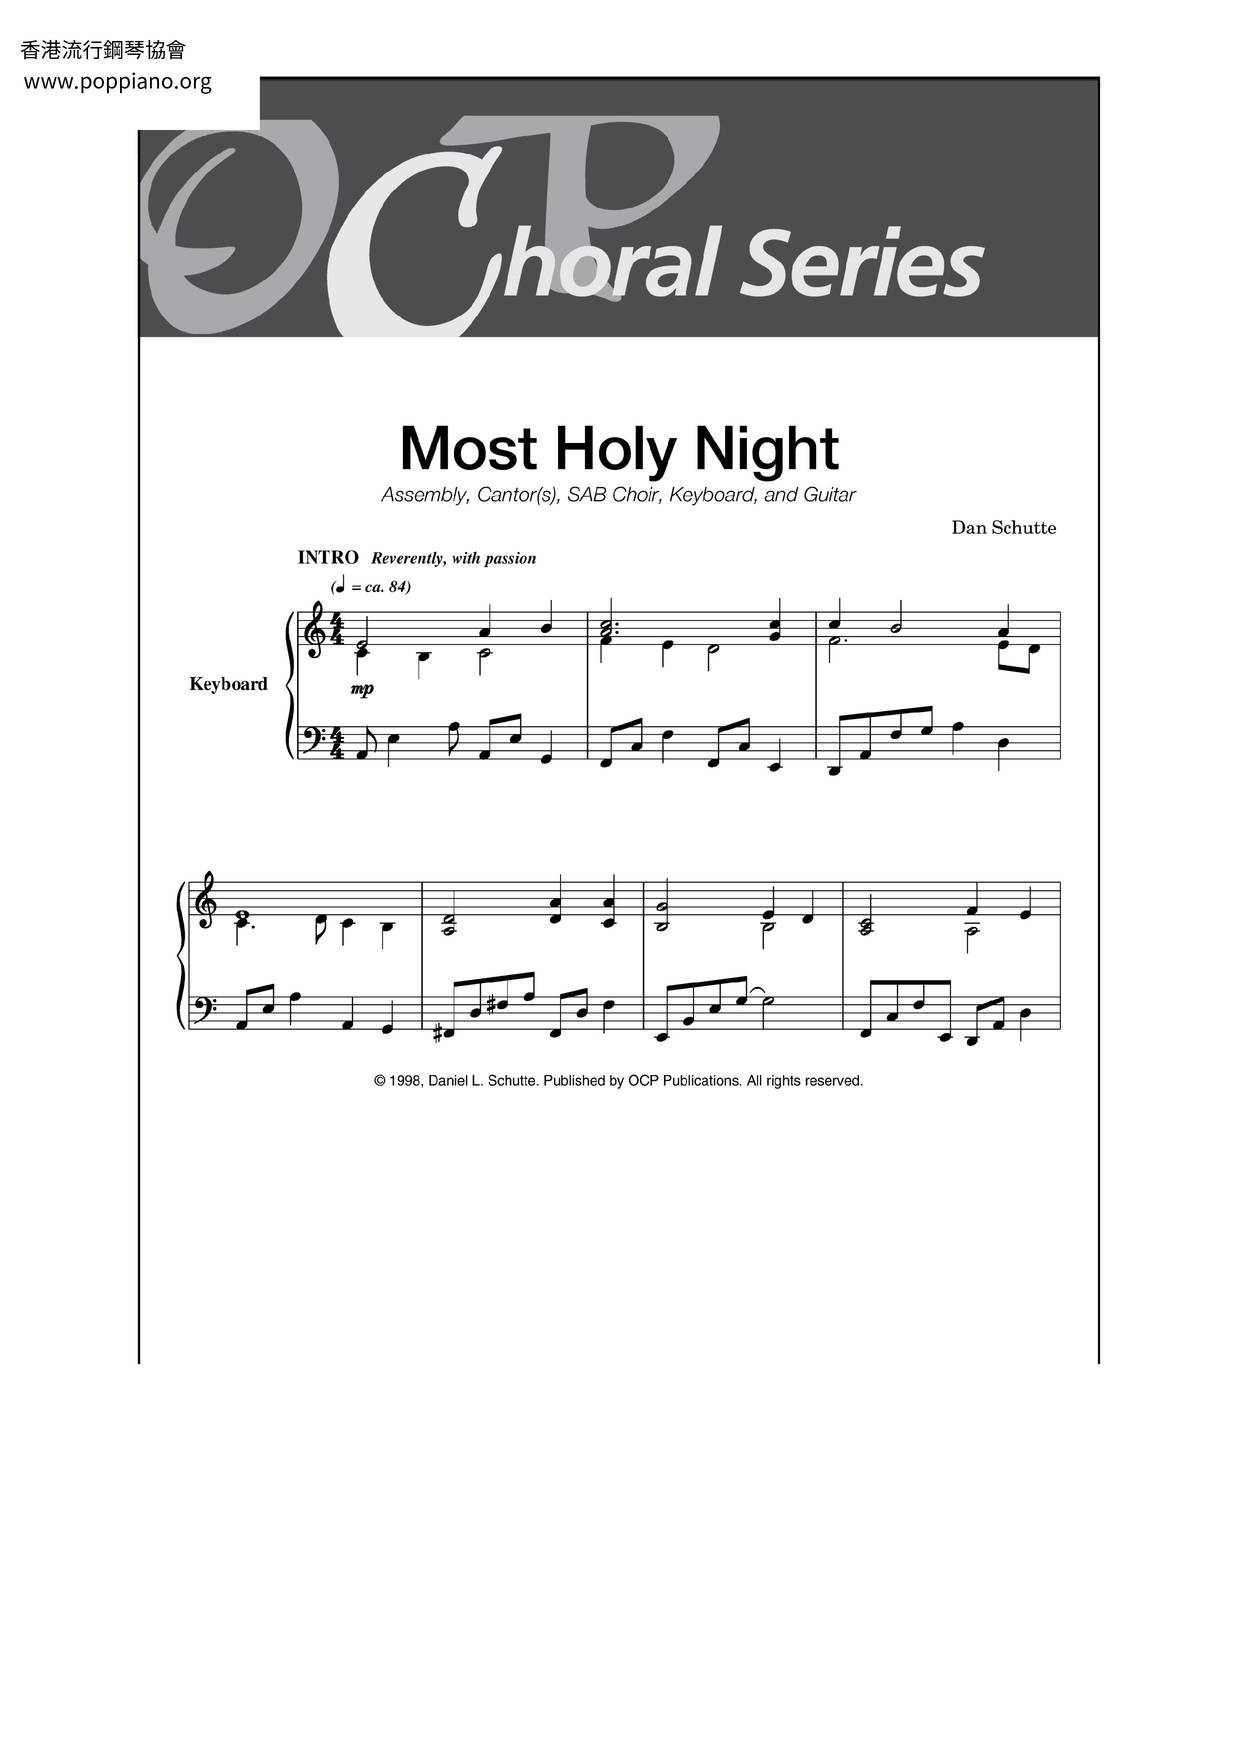 Most Holy Night Score